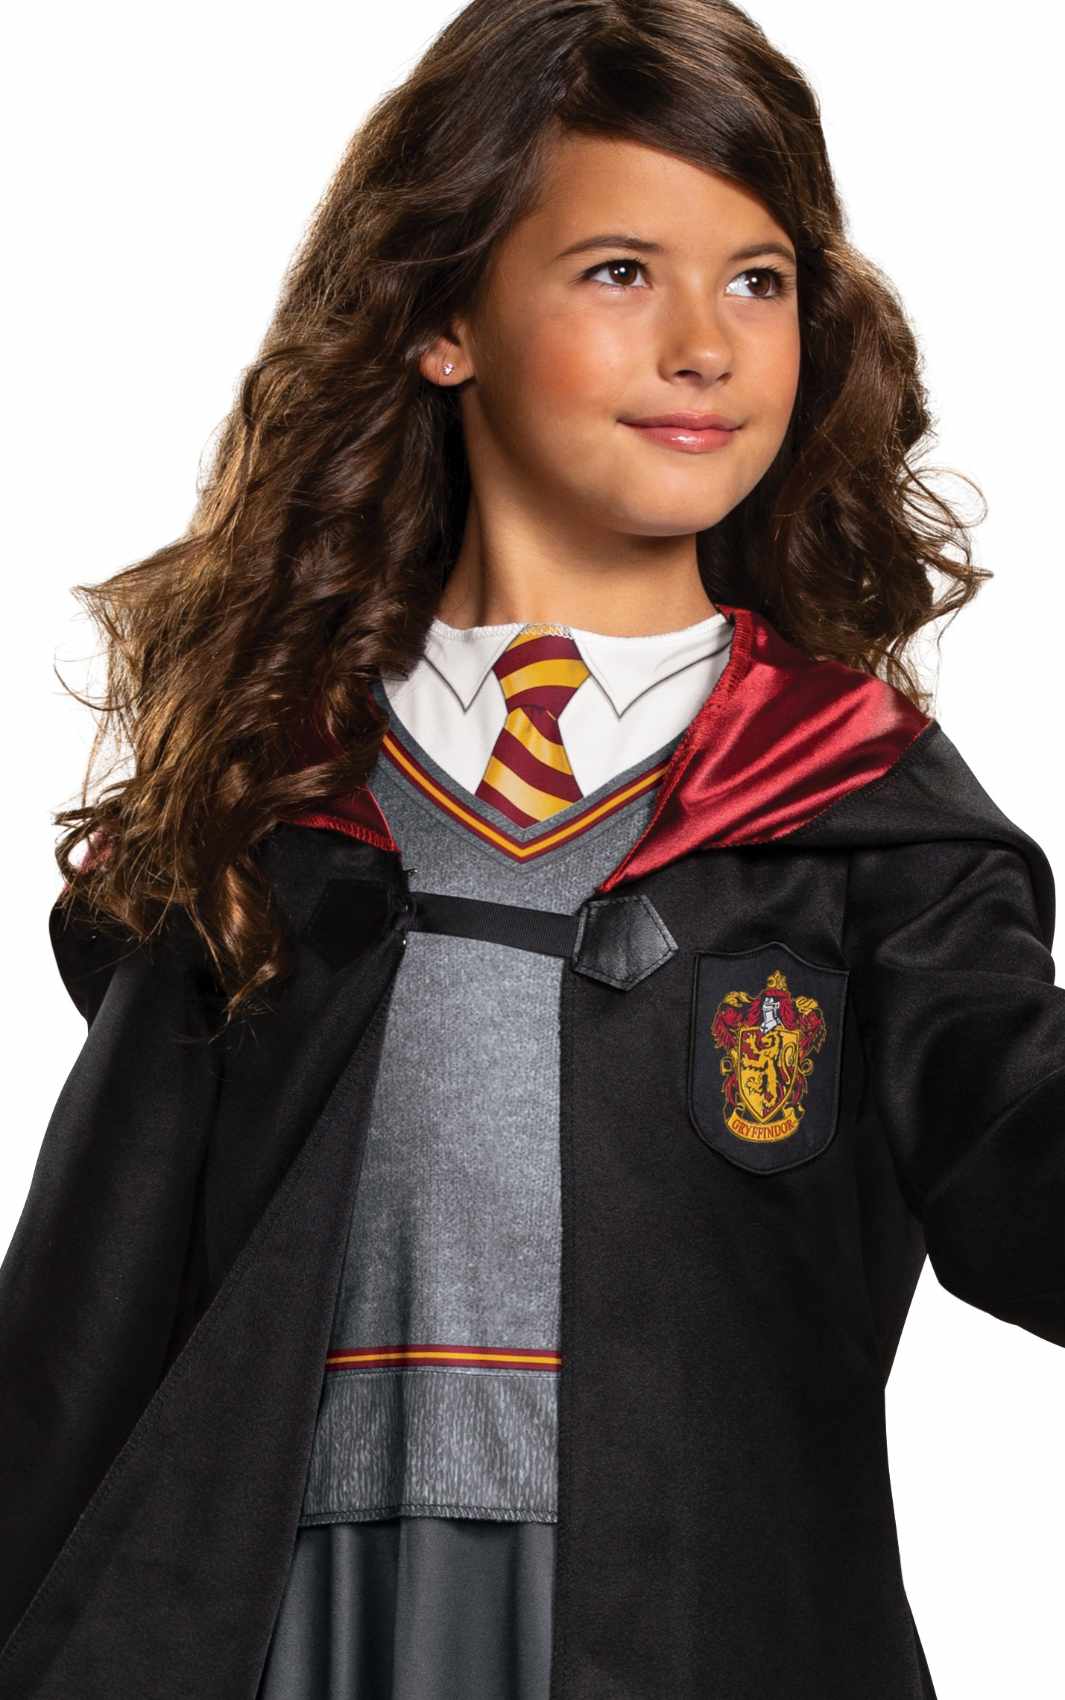 Costume de Hermione de Harry Potter